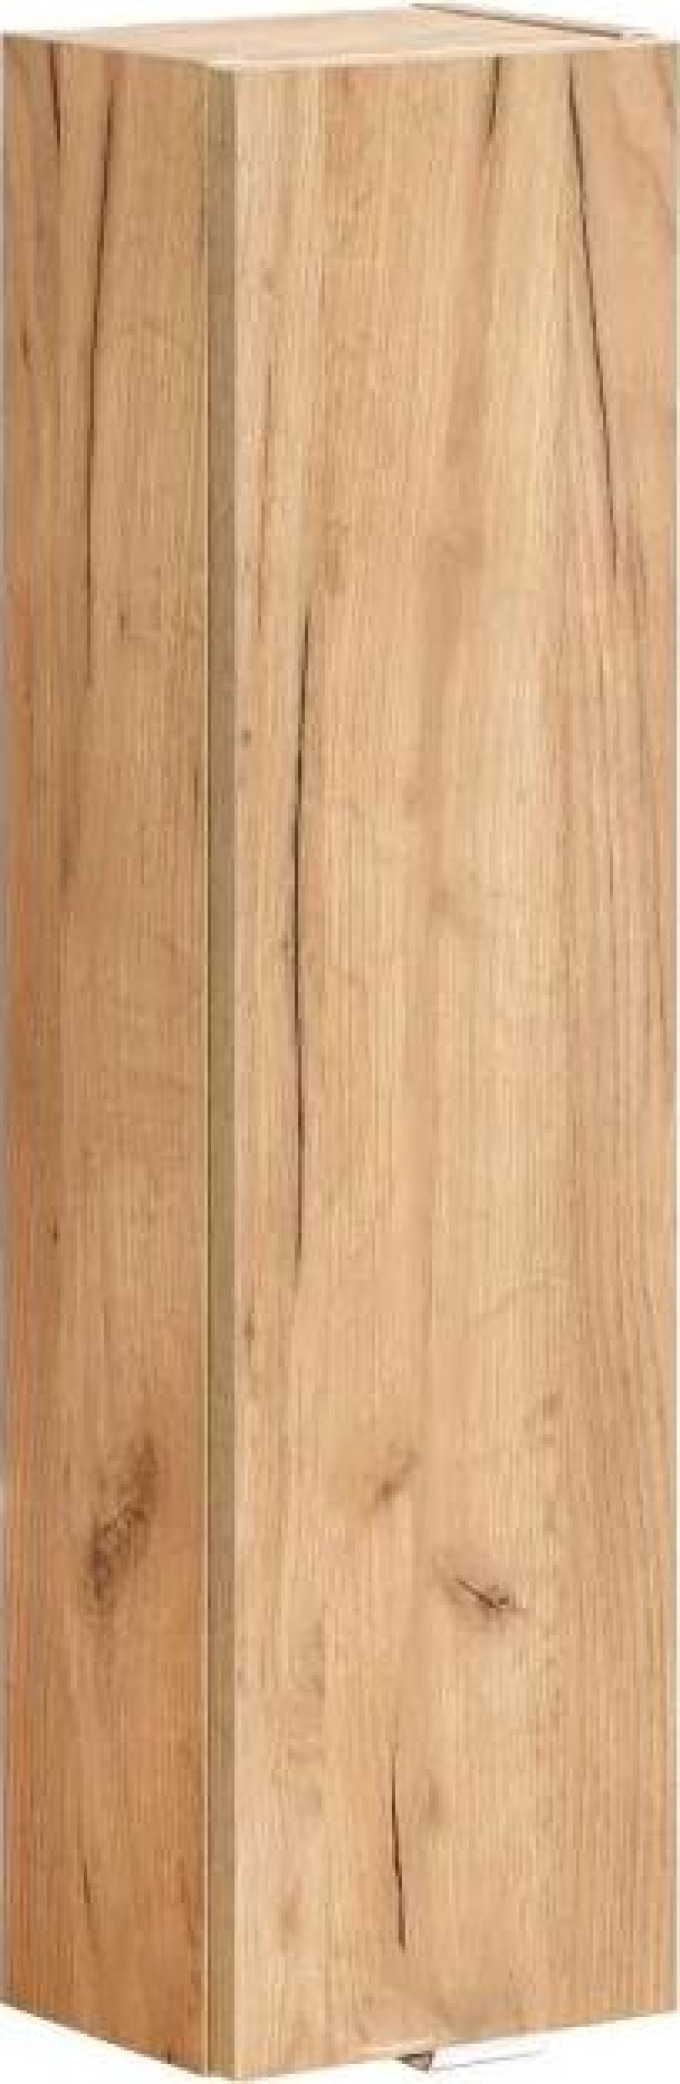 COMAD Horní závěsná skříňka - CAPRI 830 oak, zlatý dub